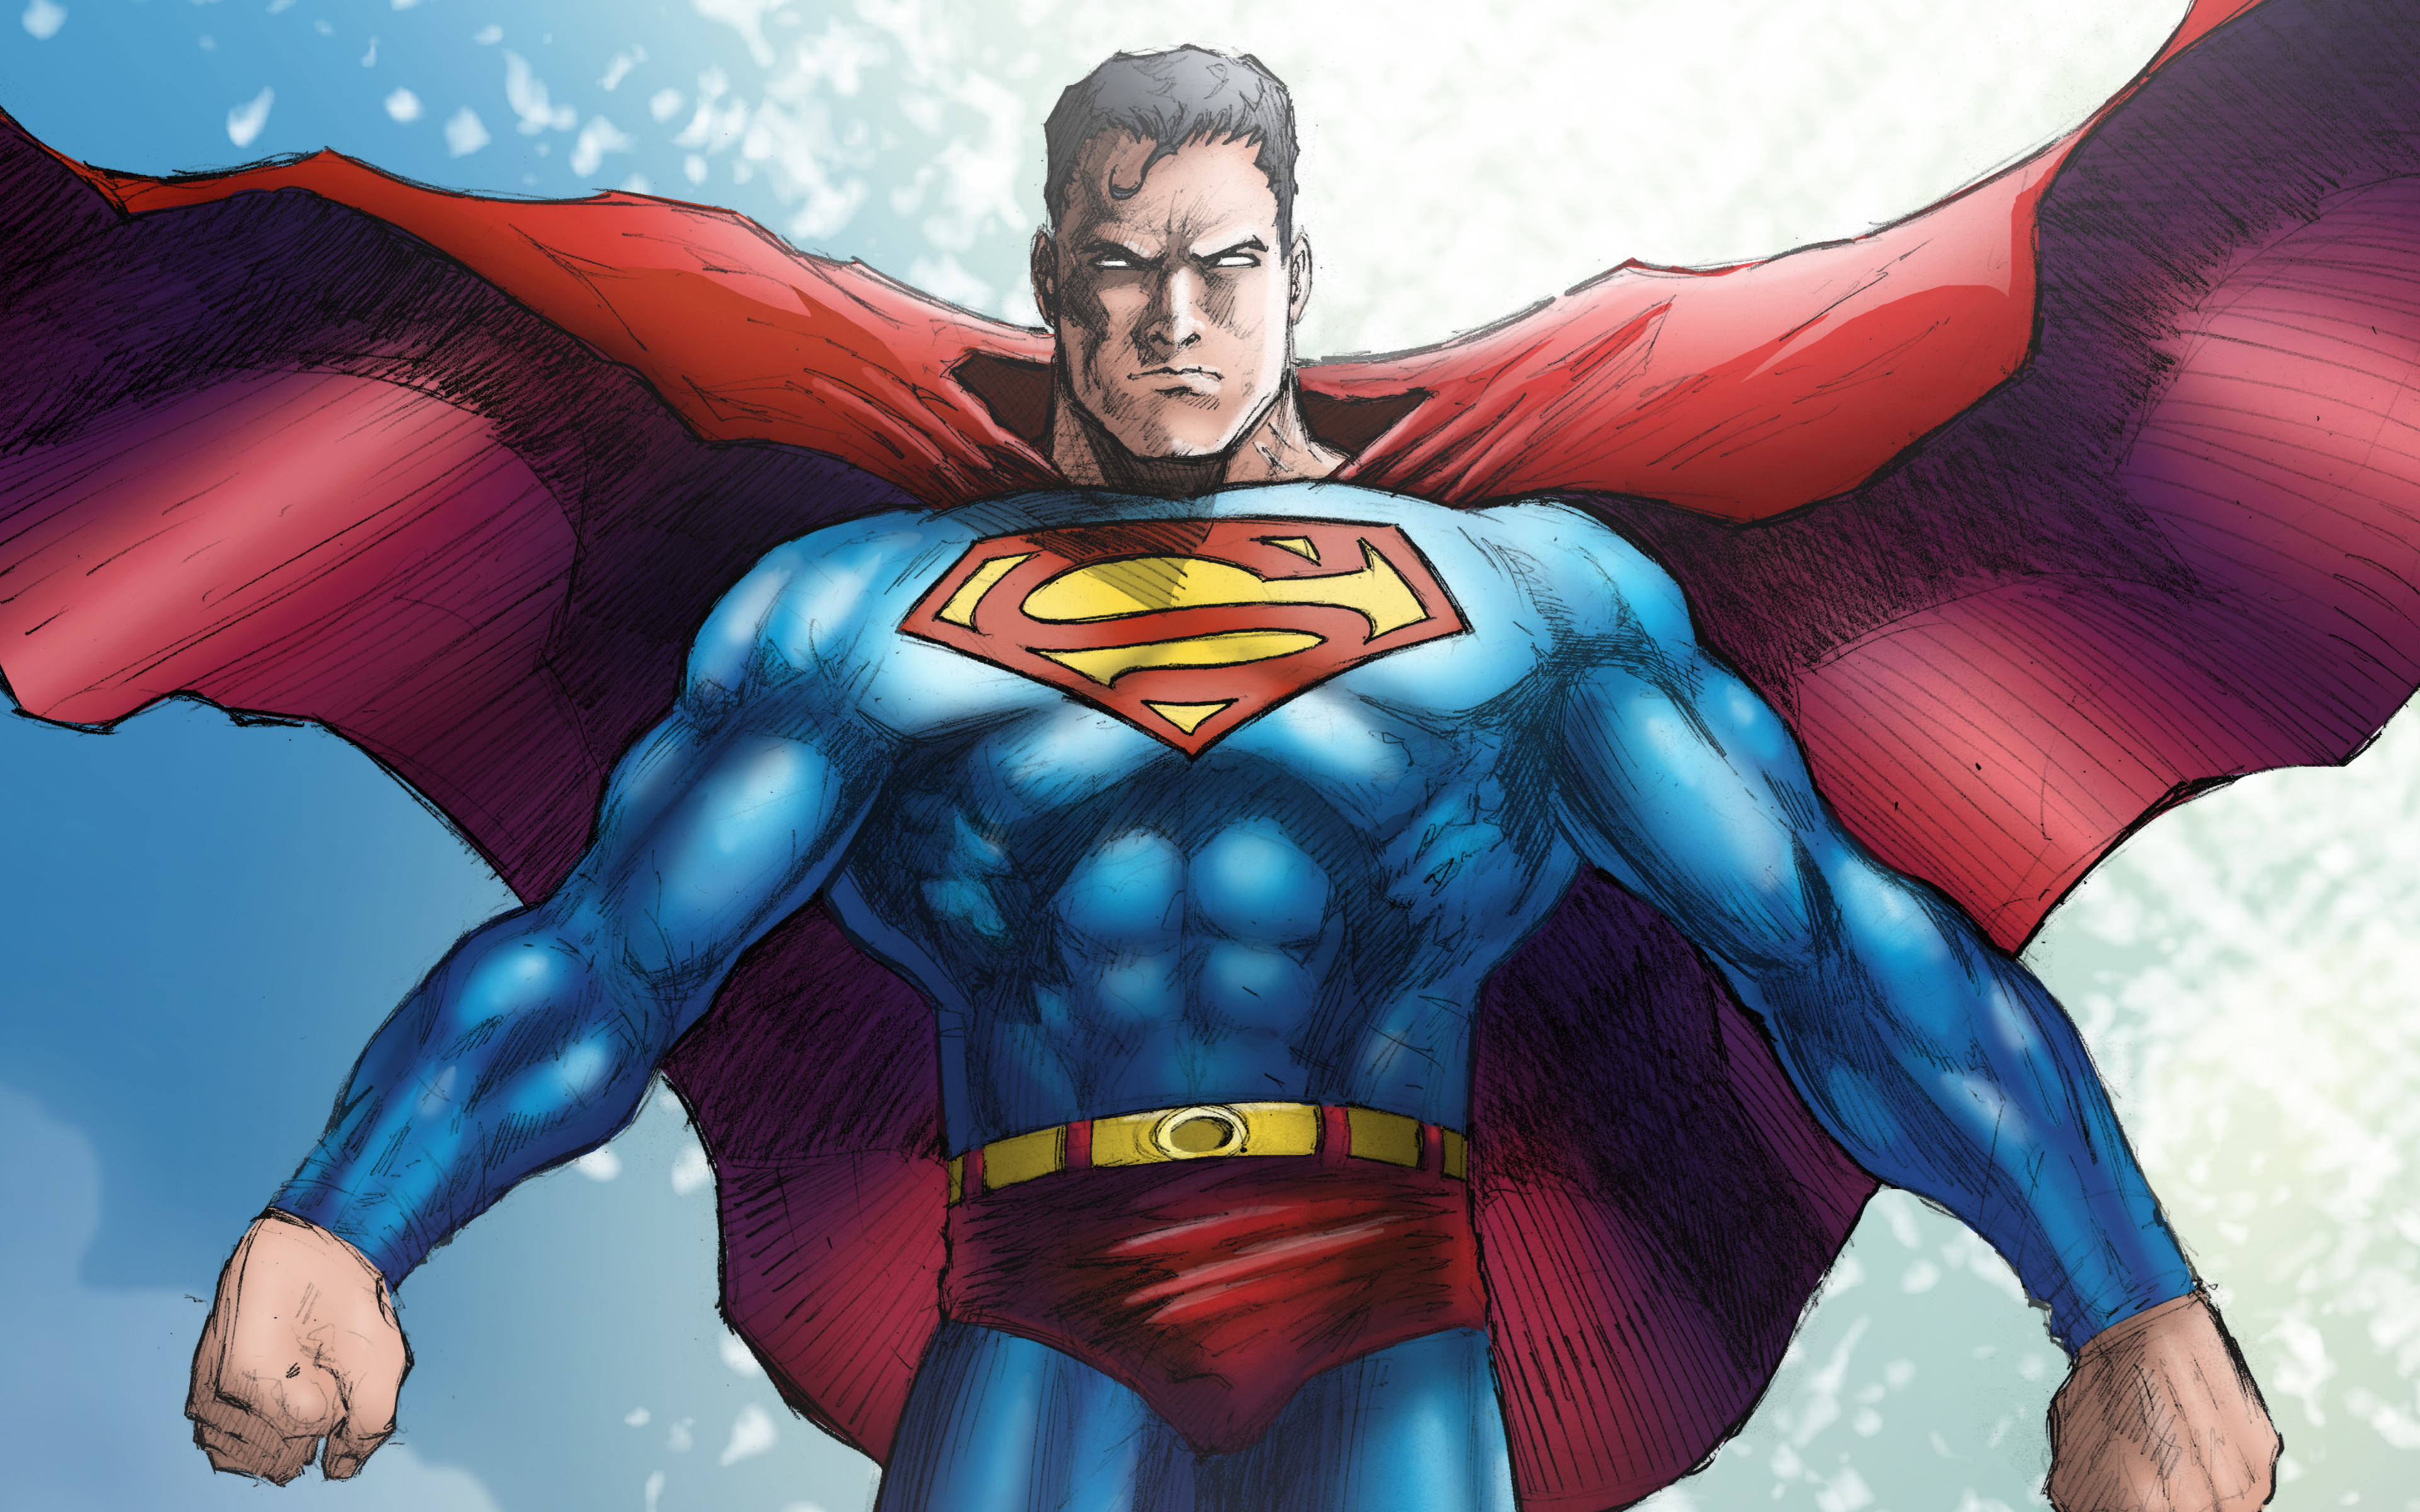 Superman speed up. Кларк Кент Супермен. Стив Супермен. Крутой Супермен. Картинки супергероев.